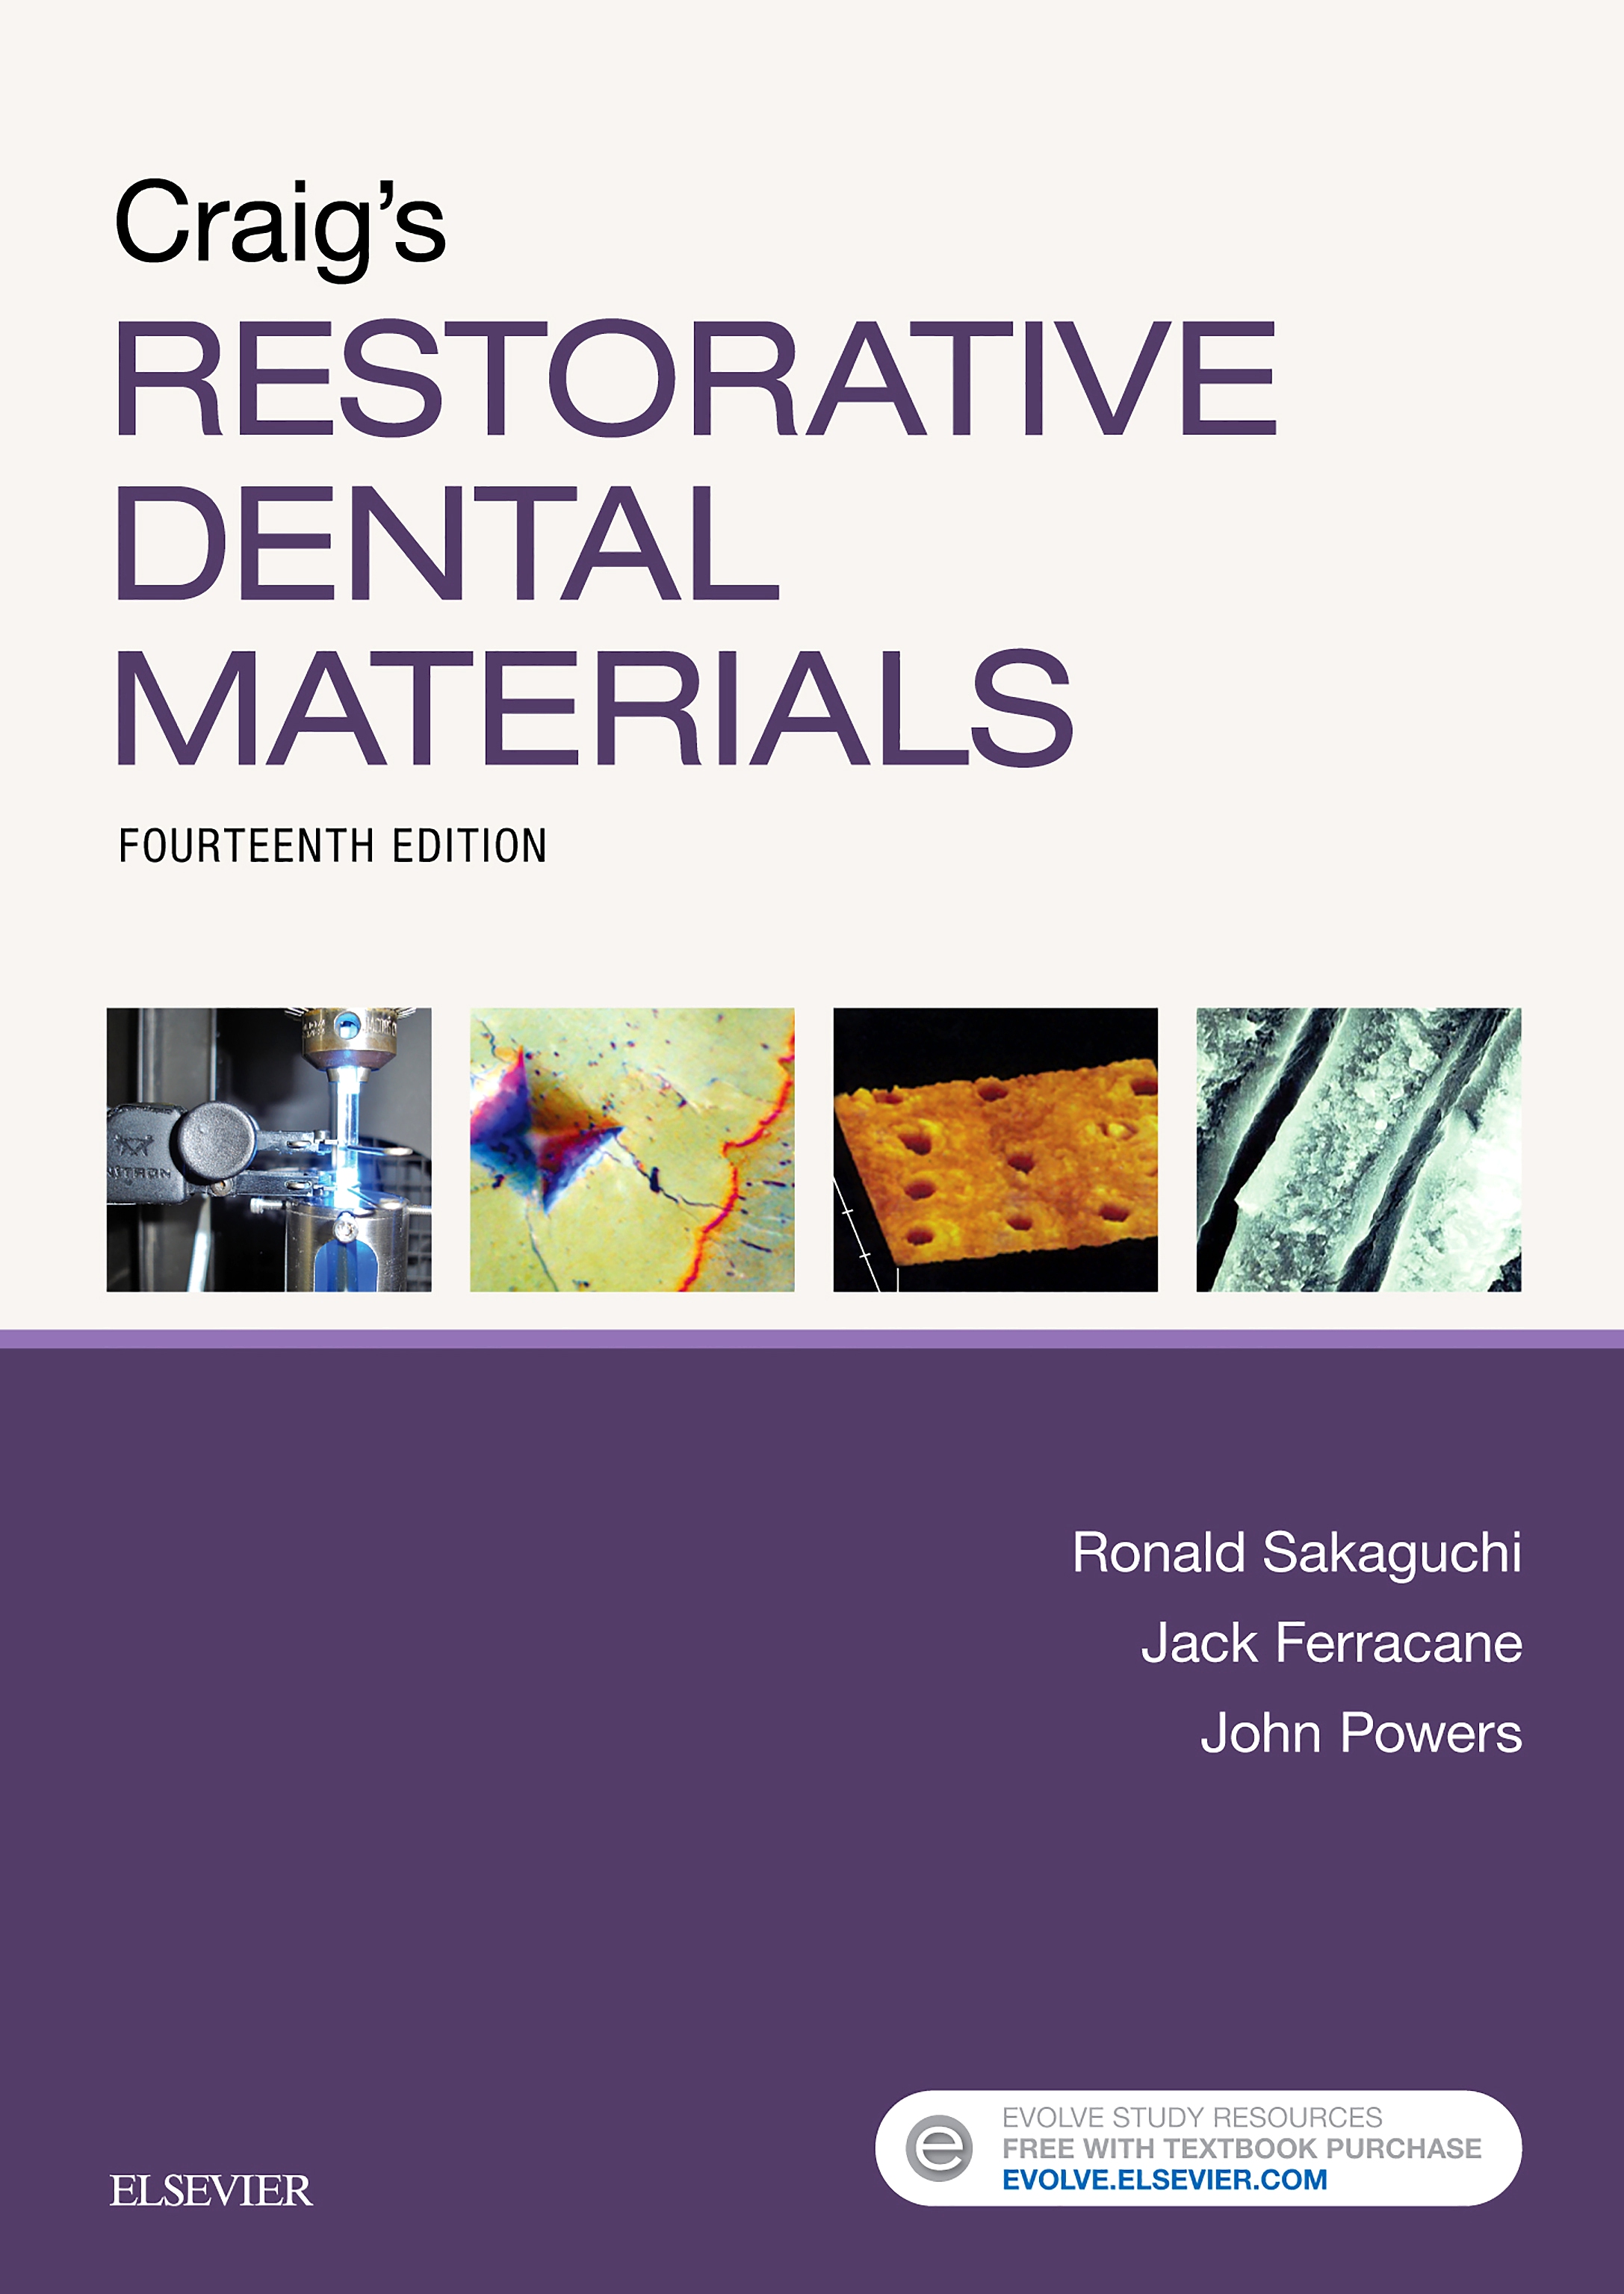 Evolve Resources for Craig's Restorative Dental Materials, 14th Edition